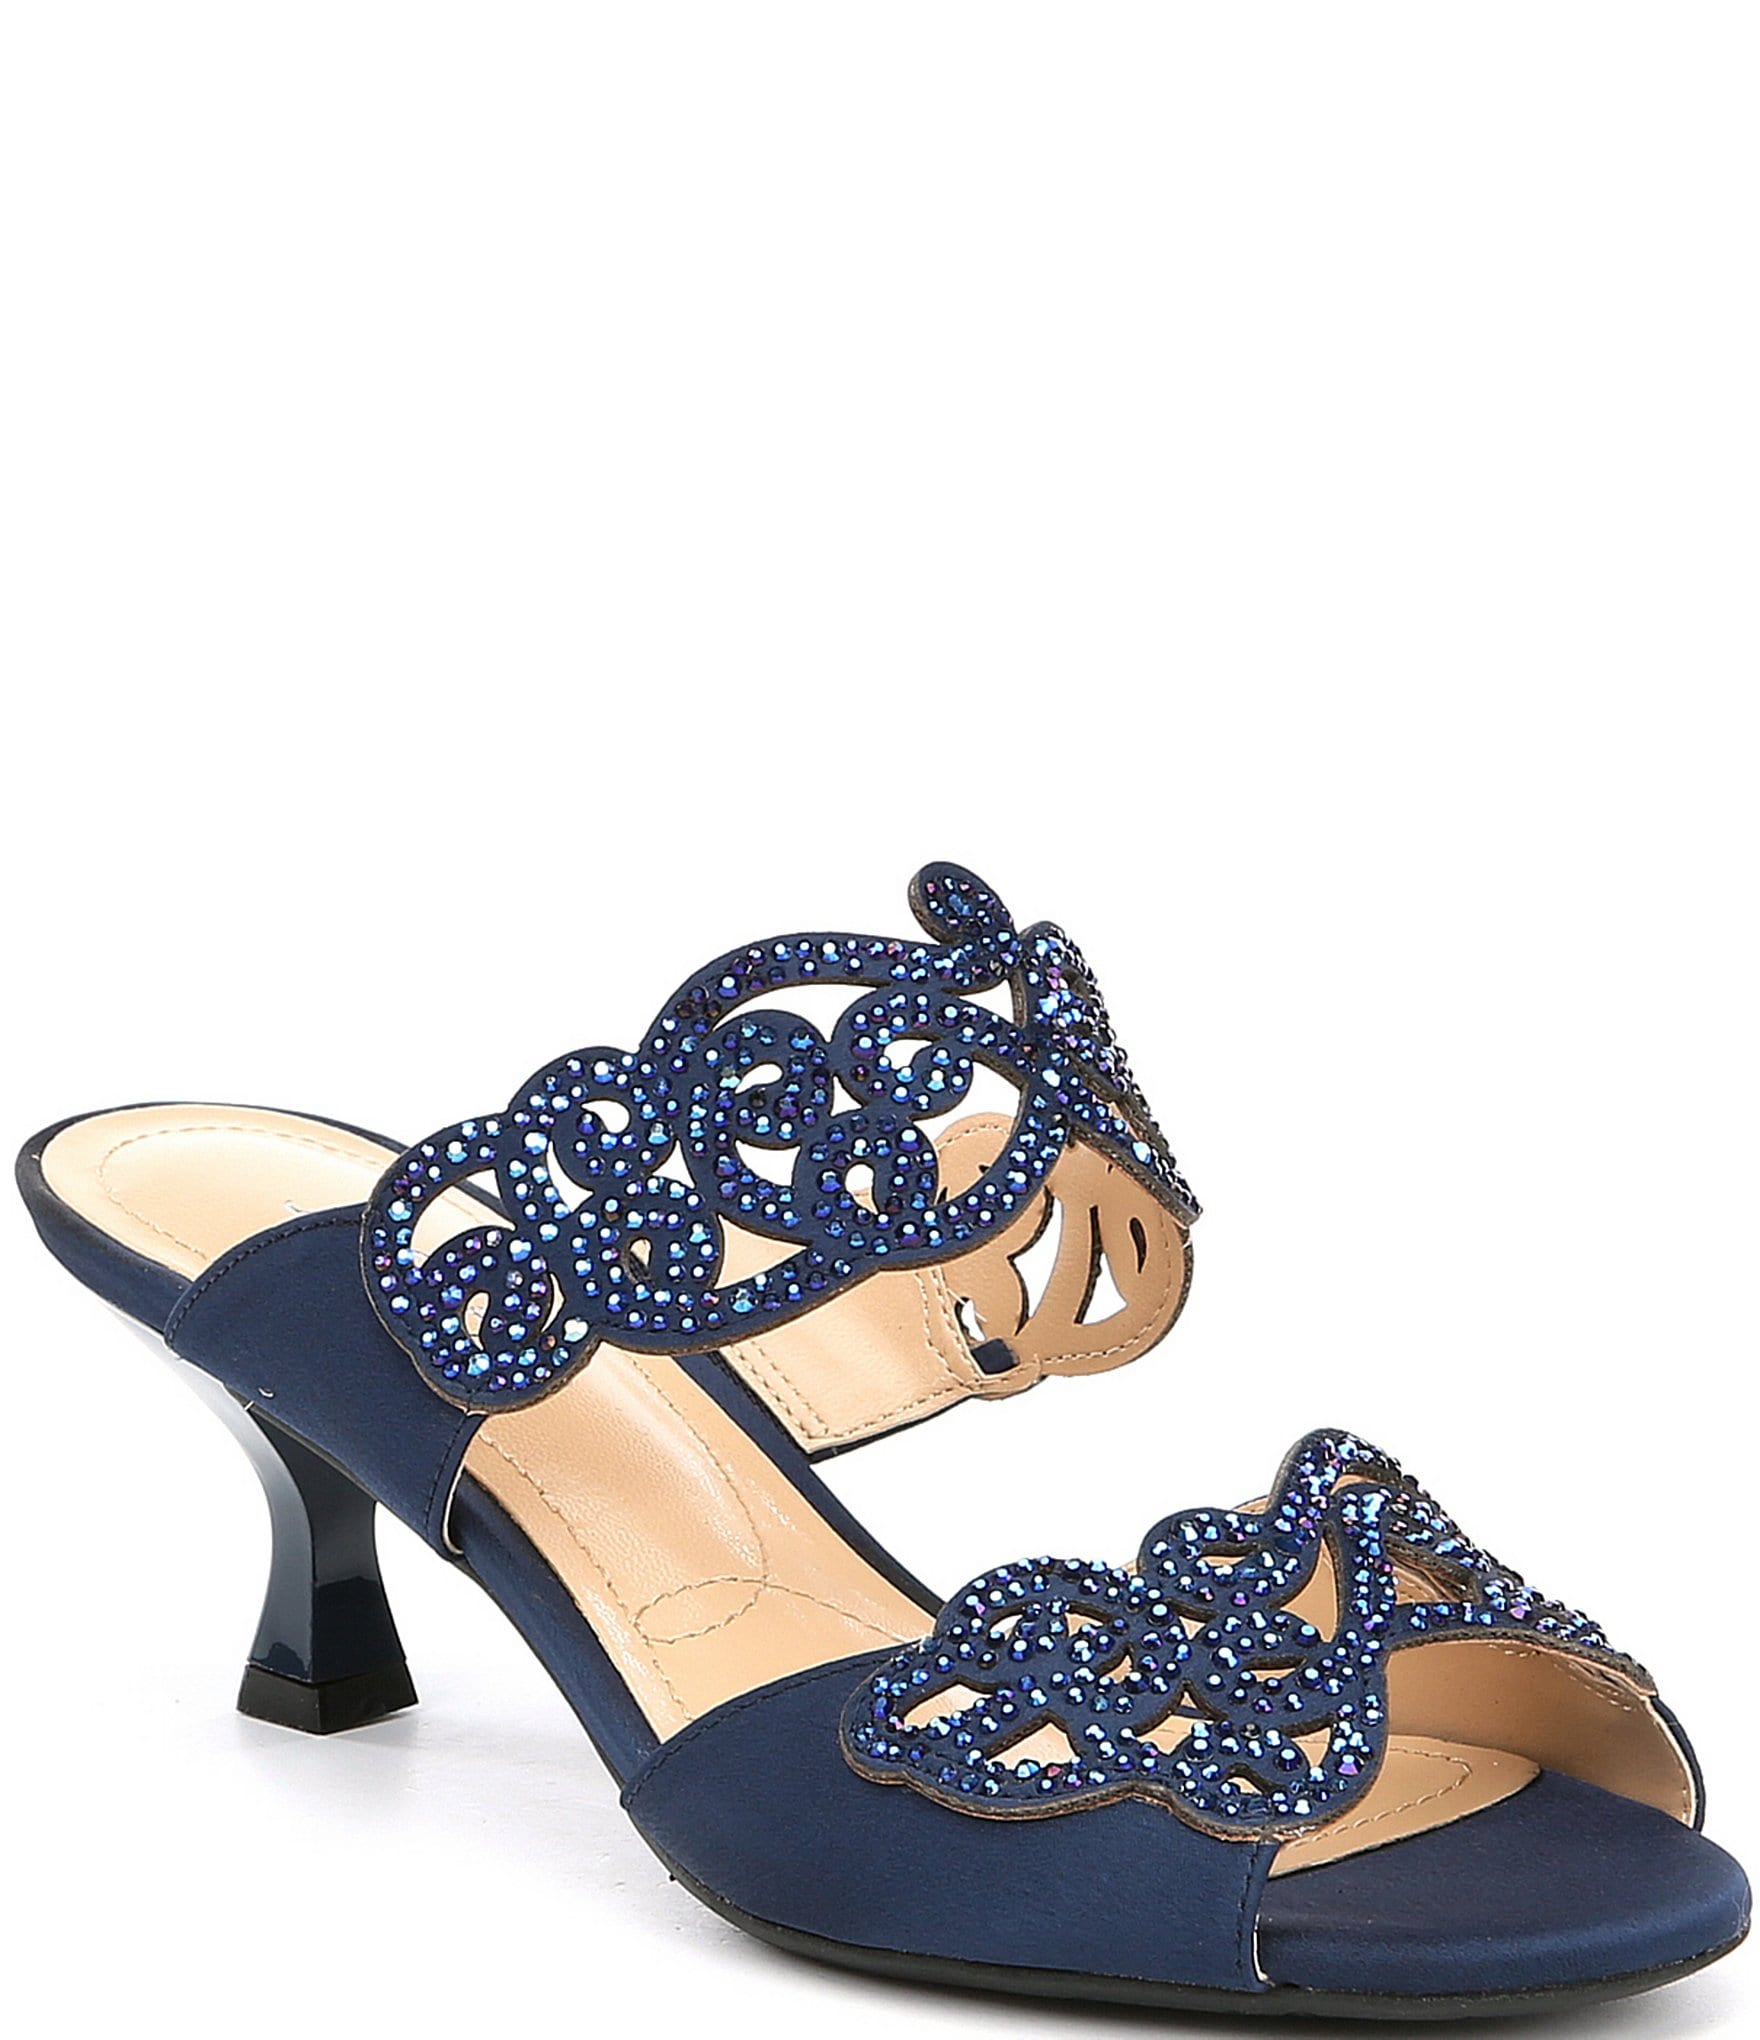 navy blue dressy: Shoes | Dillard's